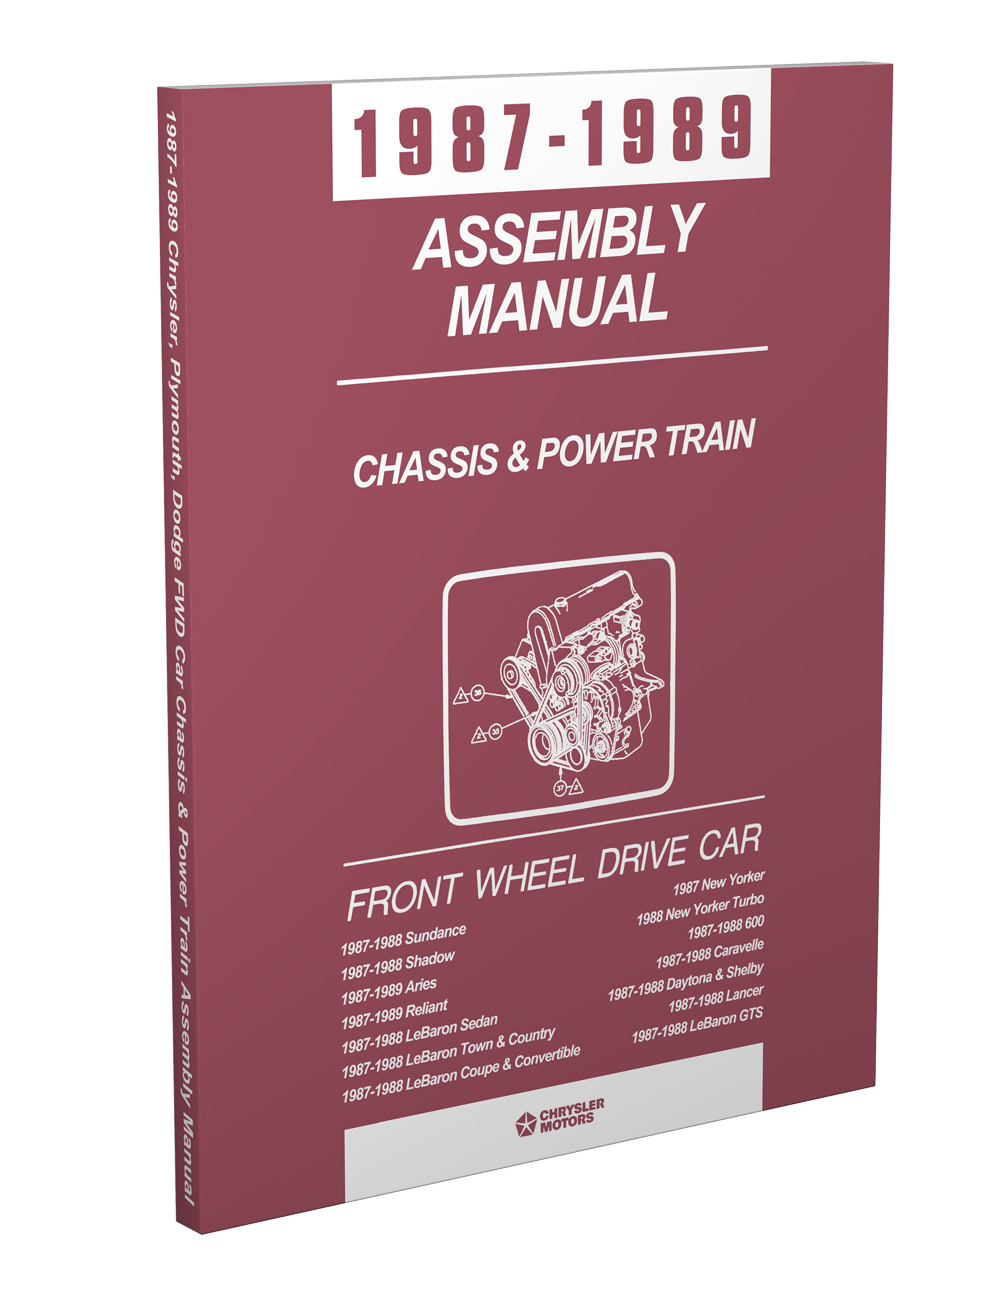 1987-1989 Mopar FWD Car Chassis & Power Train Assembly Manual Reprint